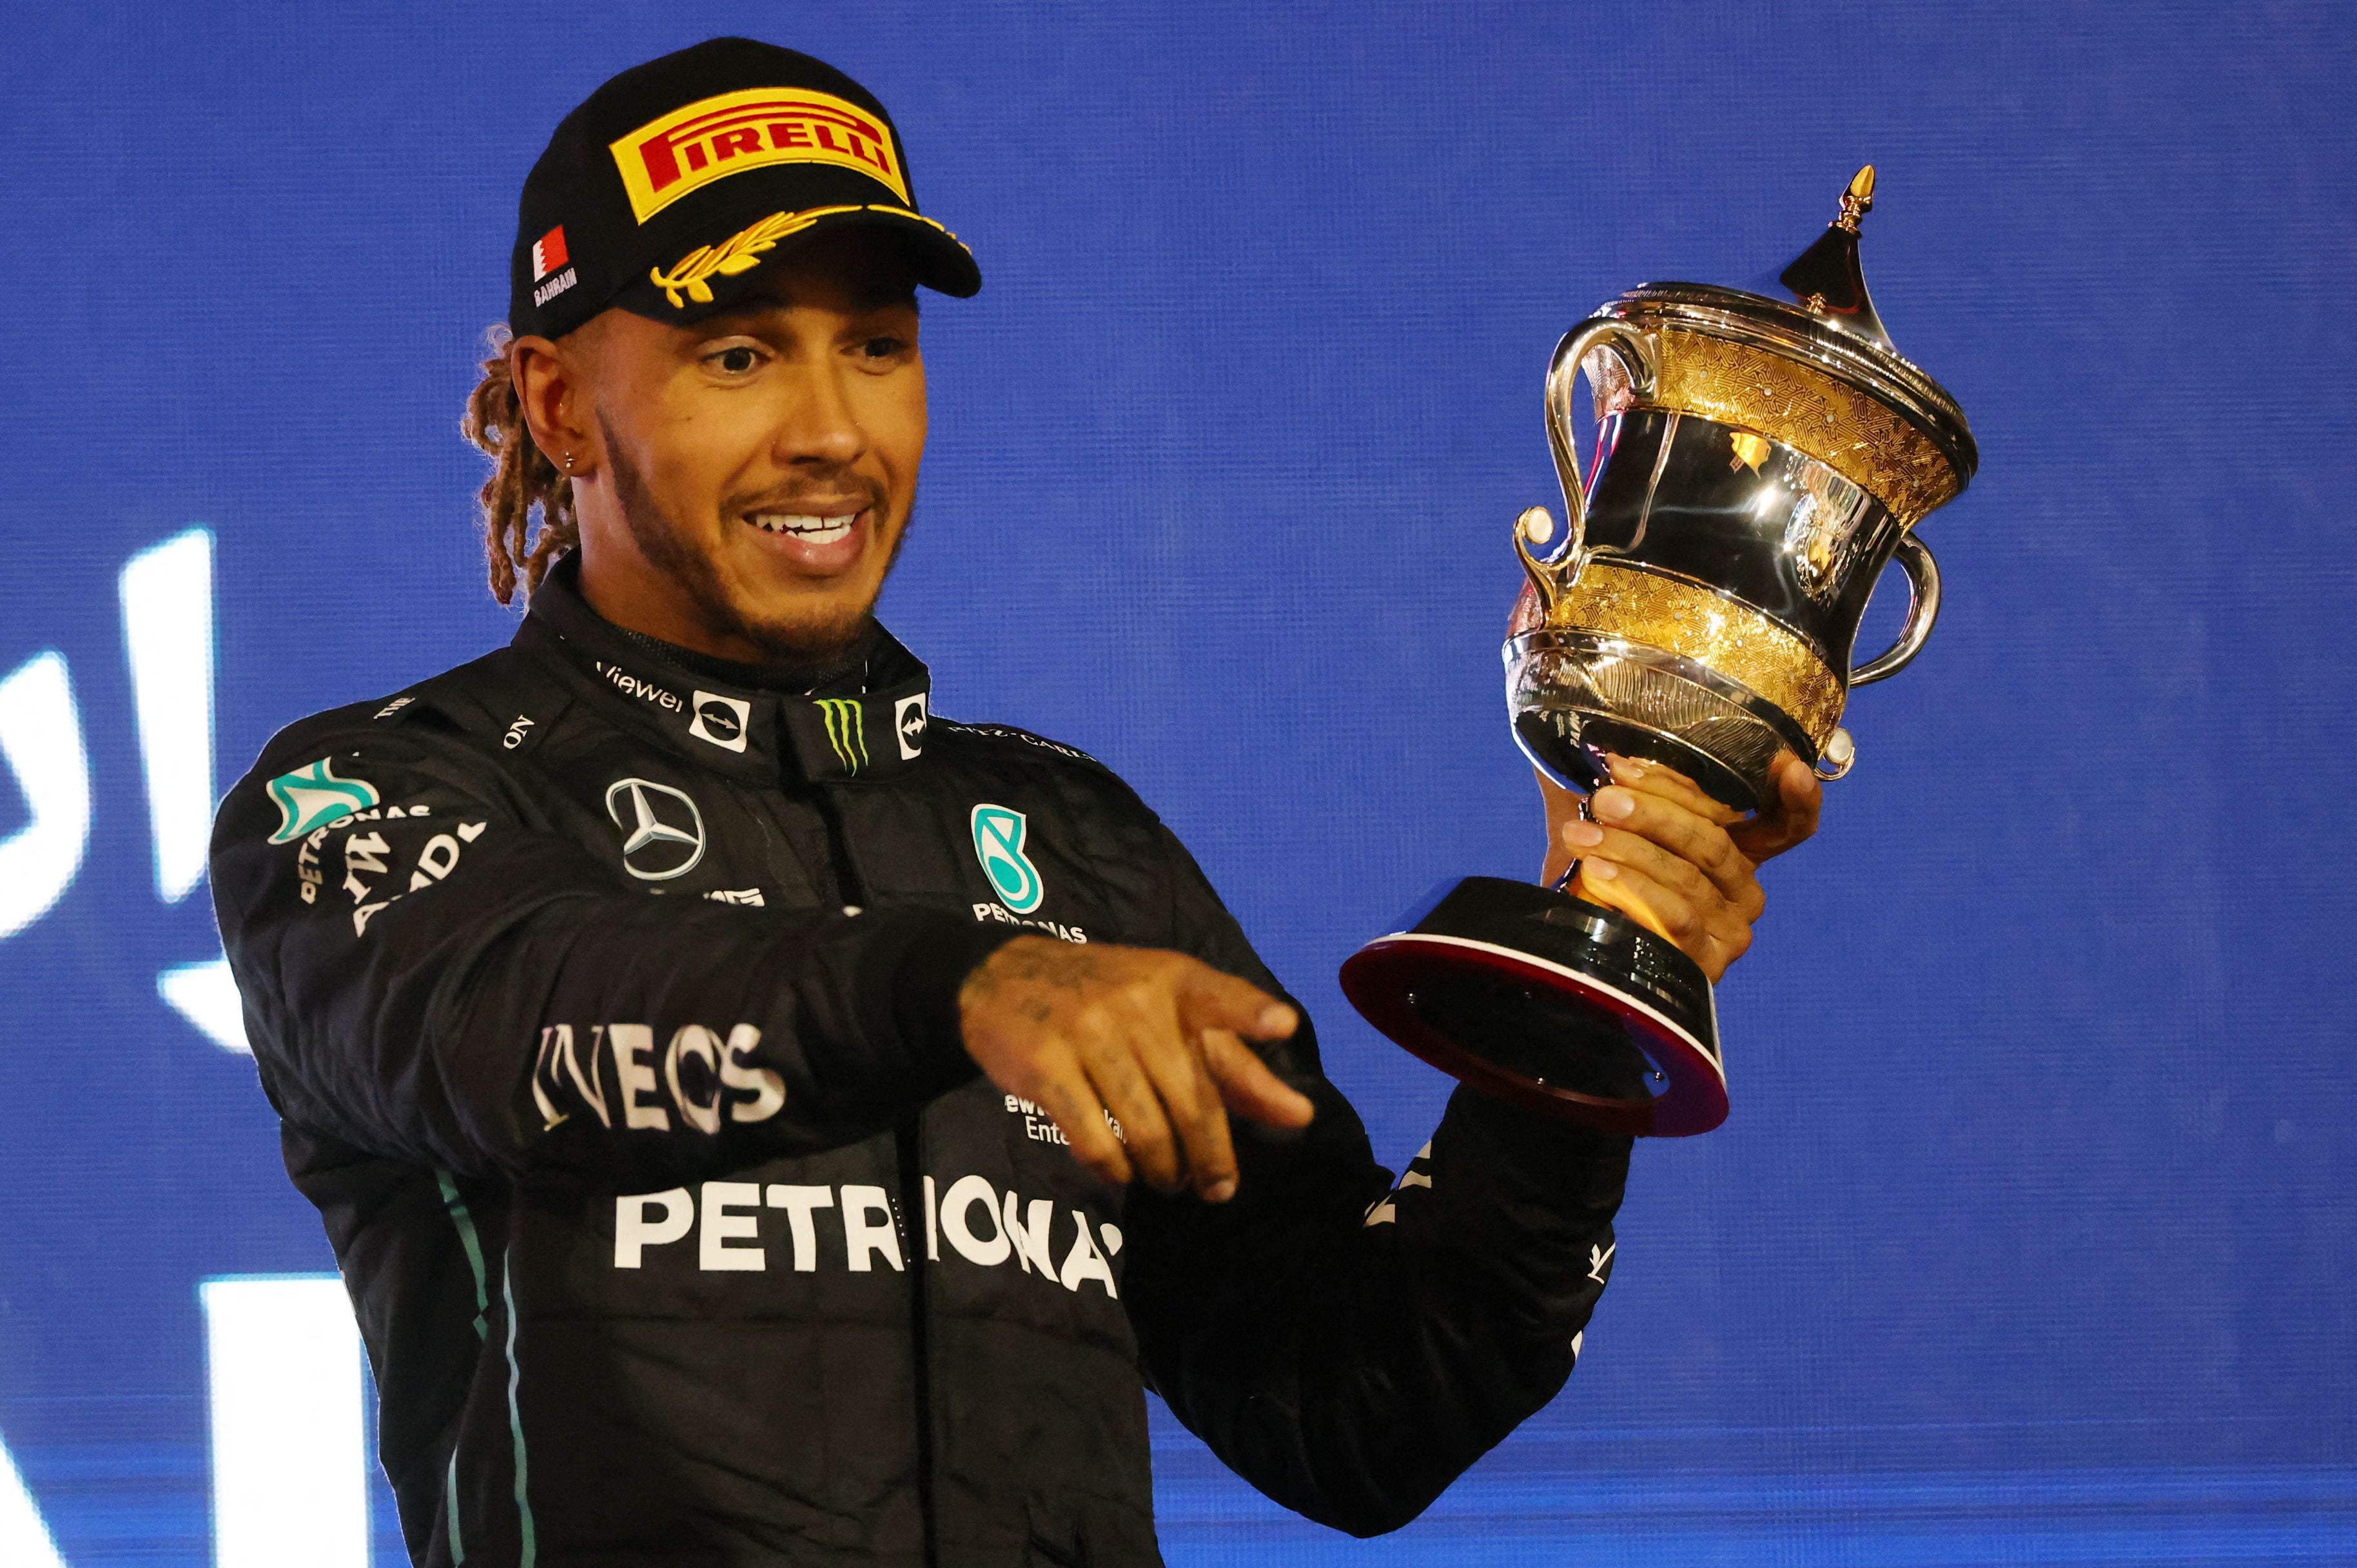 Lewis Hamilton finished third in Bahrain